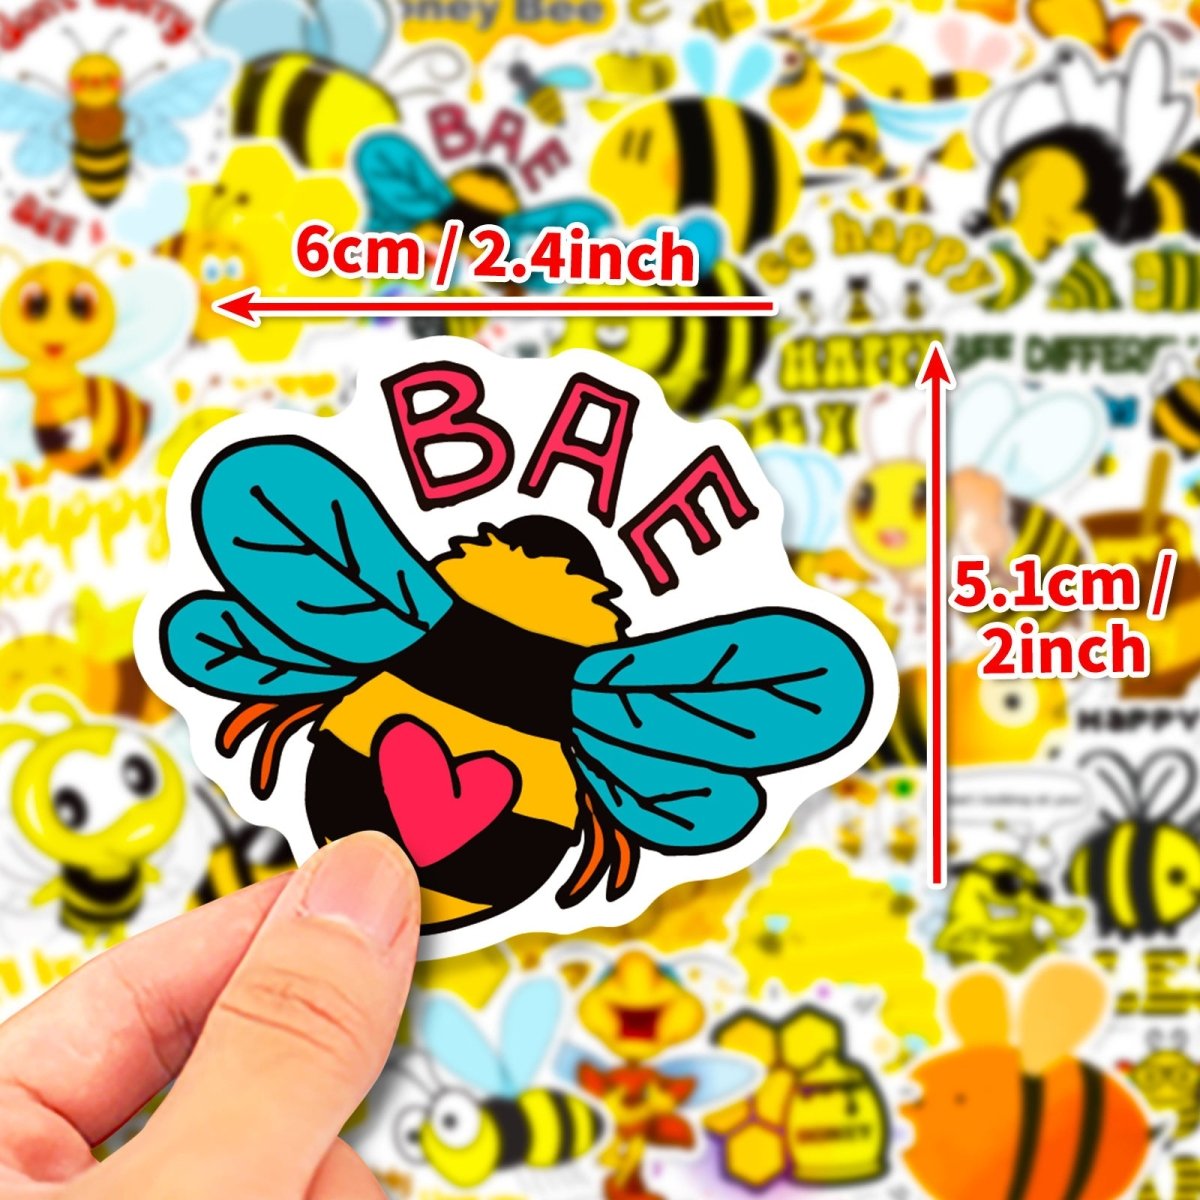 Bee Stickers Honey Bee Waterproof Vinyl Stickers for Laptop Water Bottle Phone Case Scrapbooking Party Bag Fillers (50 Pcs)